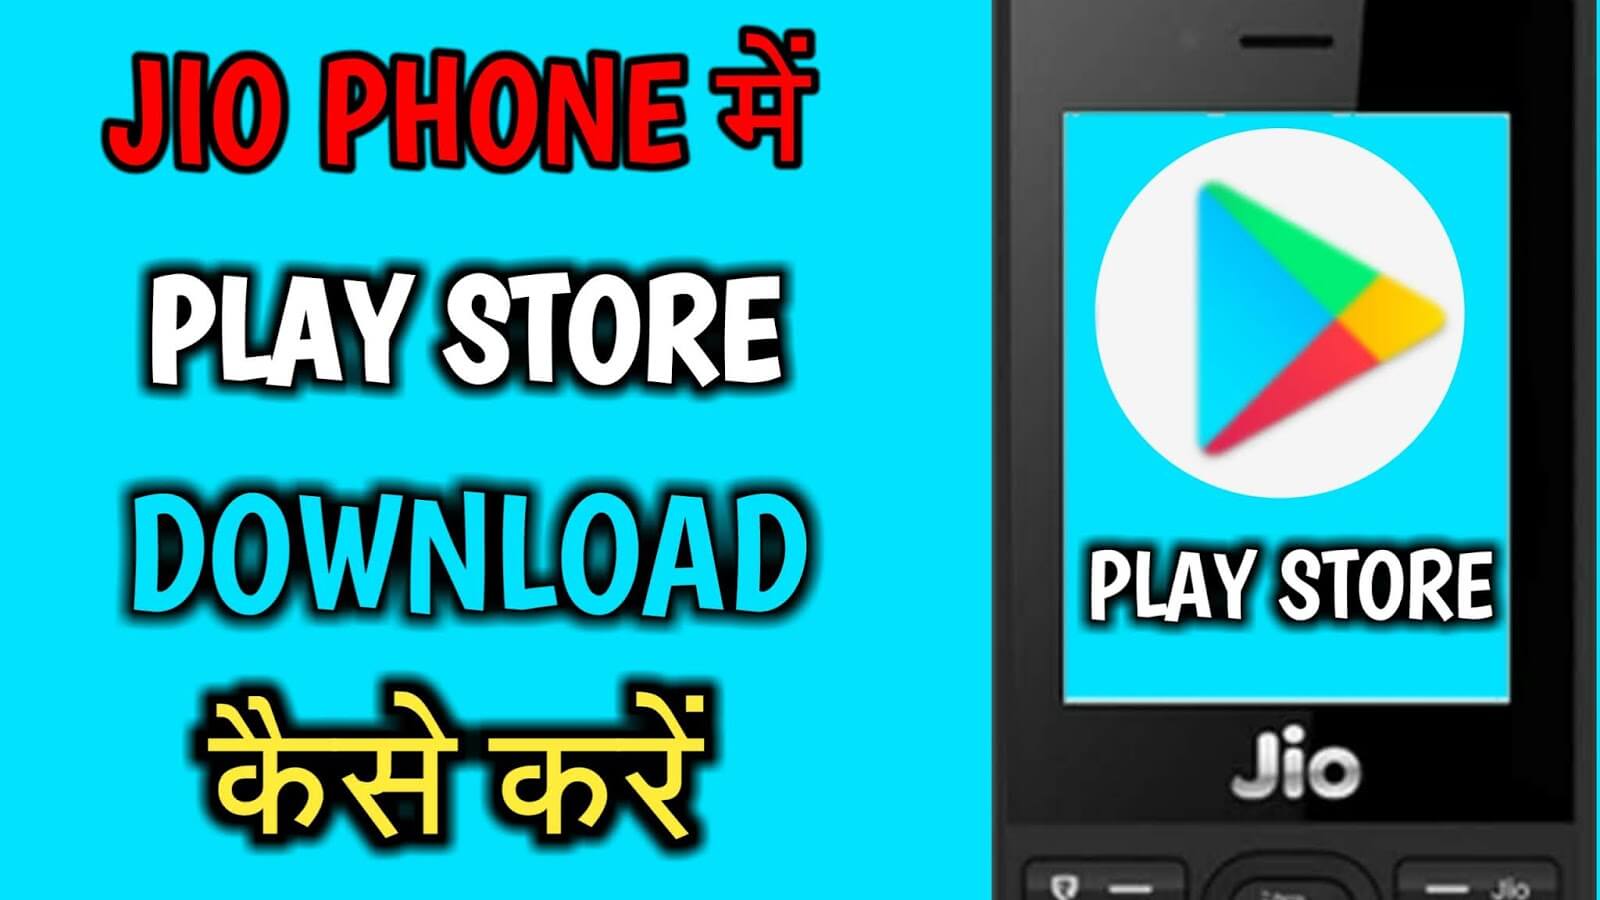 play store download jio phone image